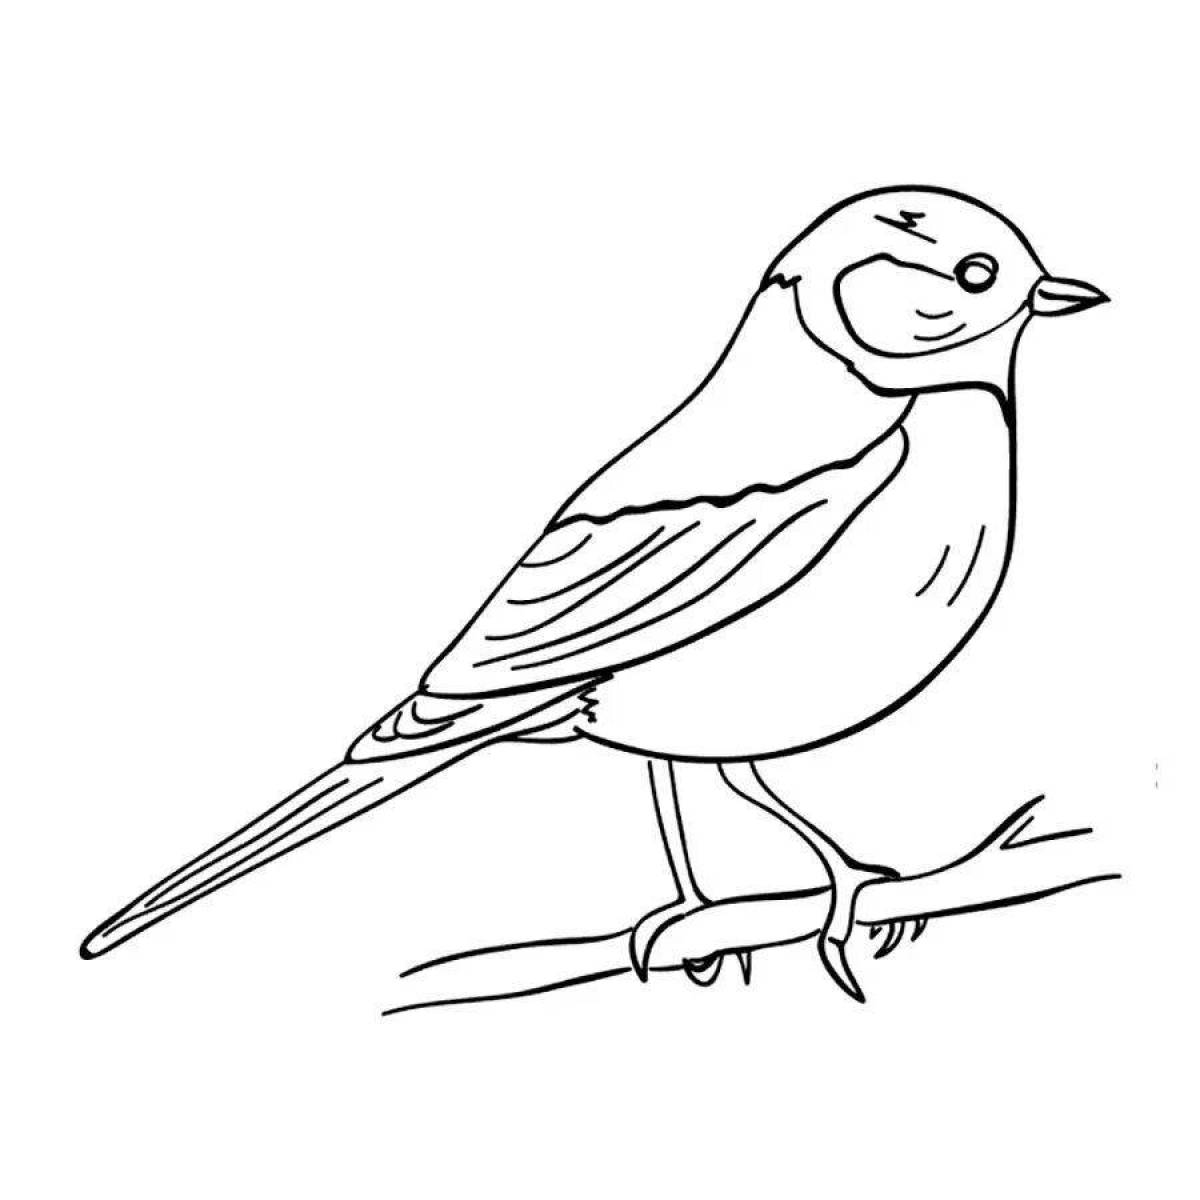 Bright sparrow in winter coloring book